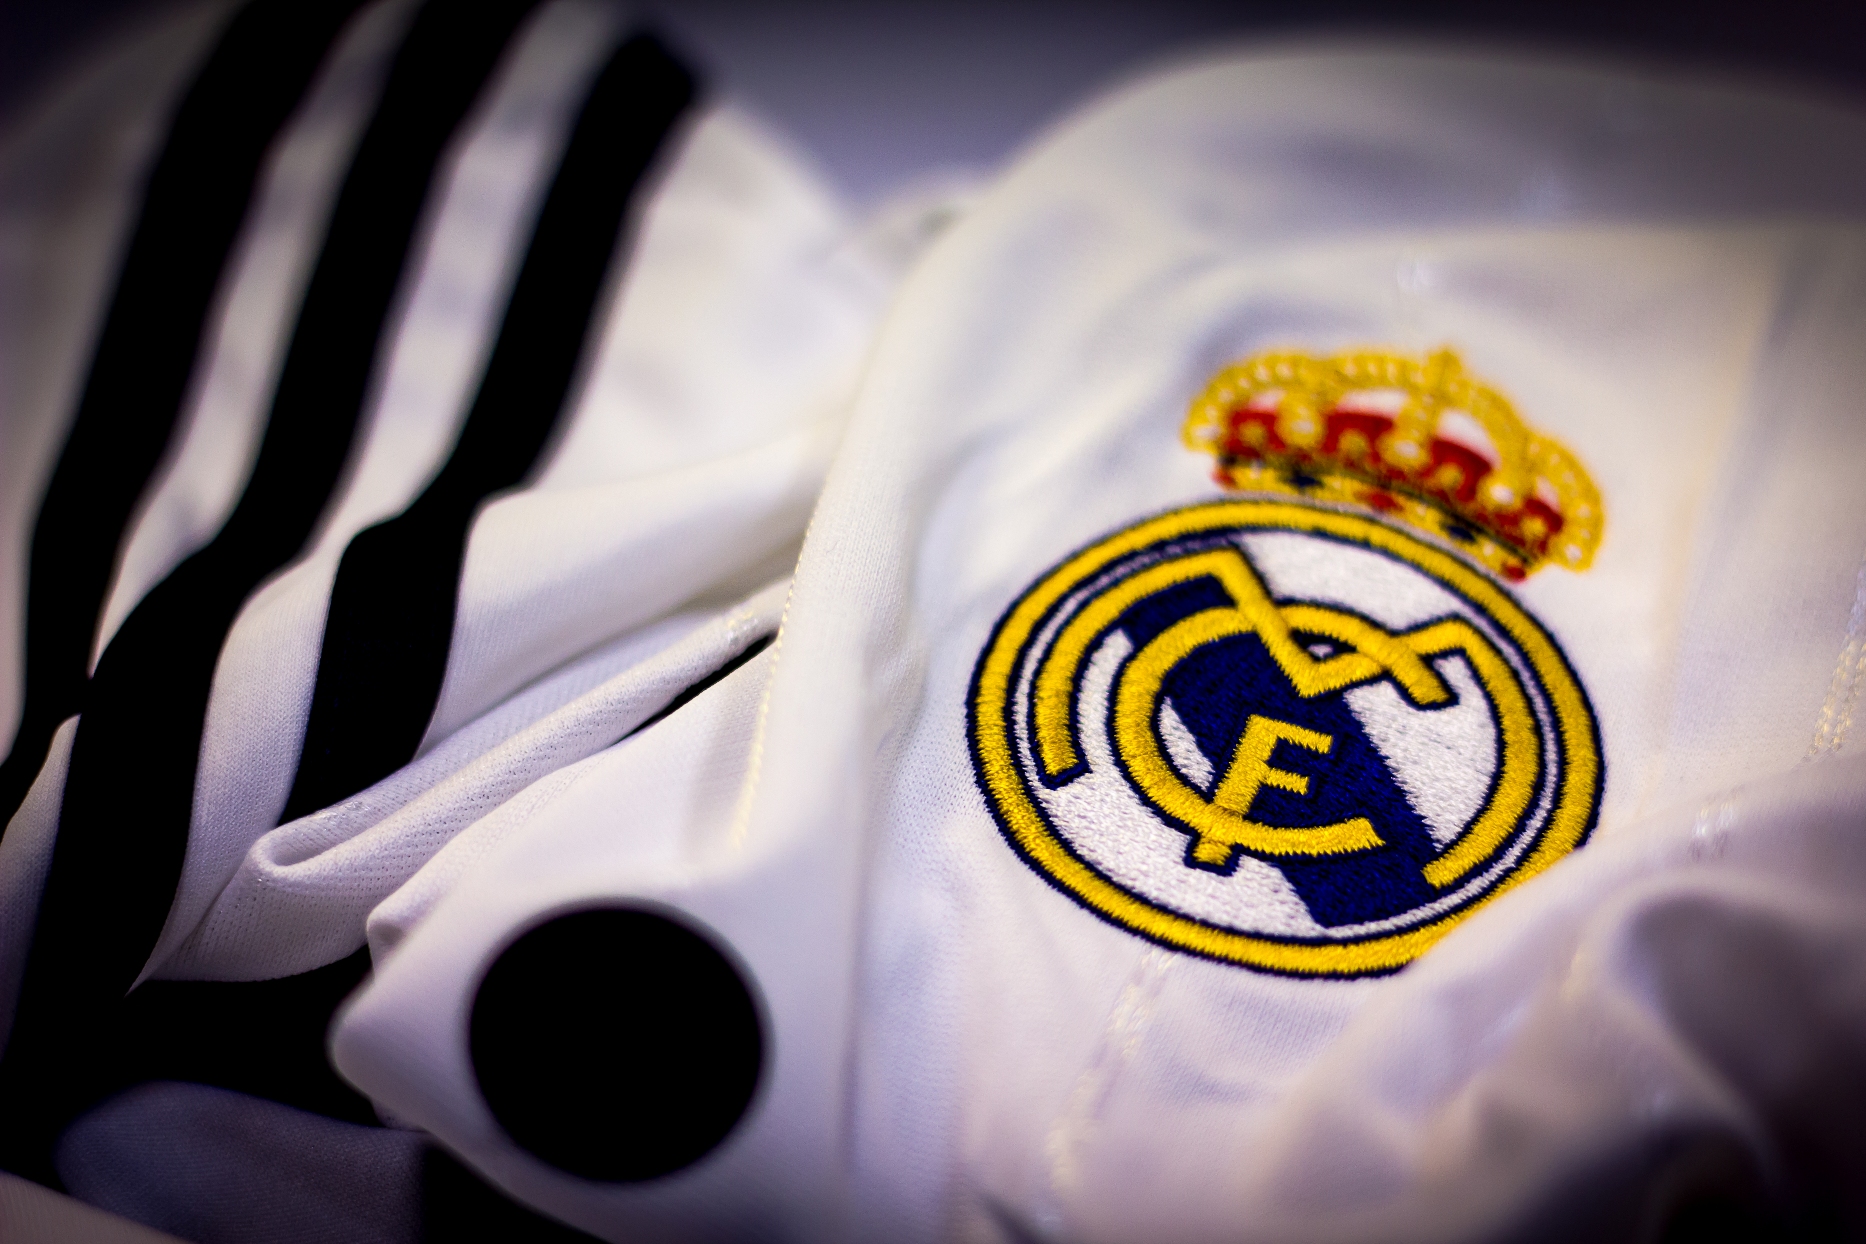 Real Madrid Wallpaper , HD Wallpaper & Backgrounds